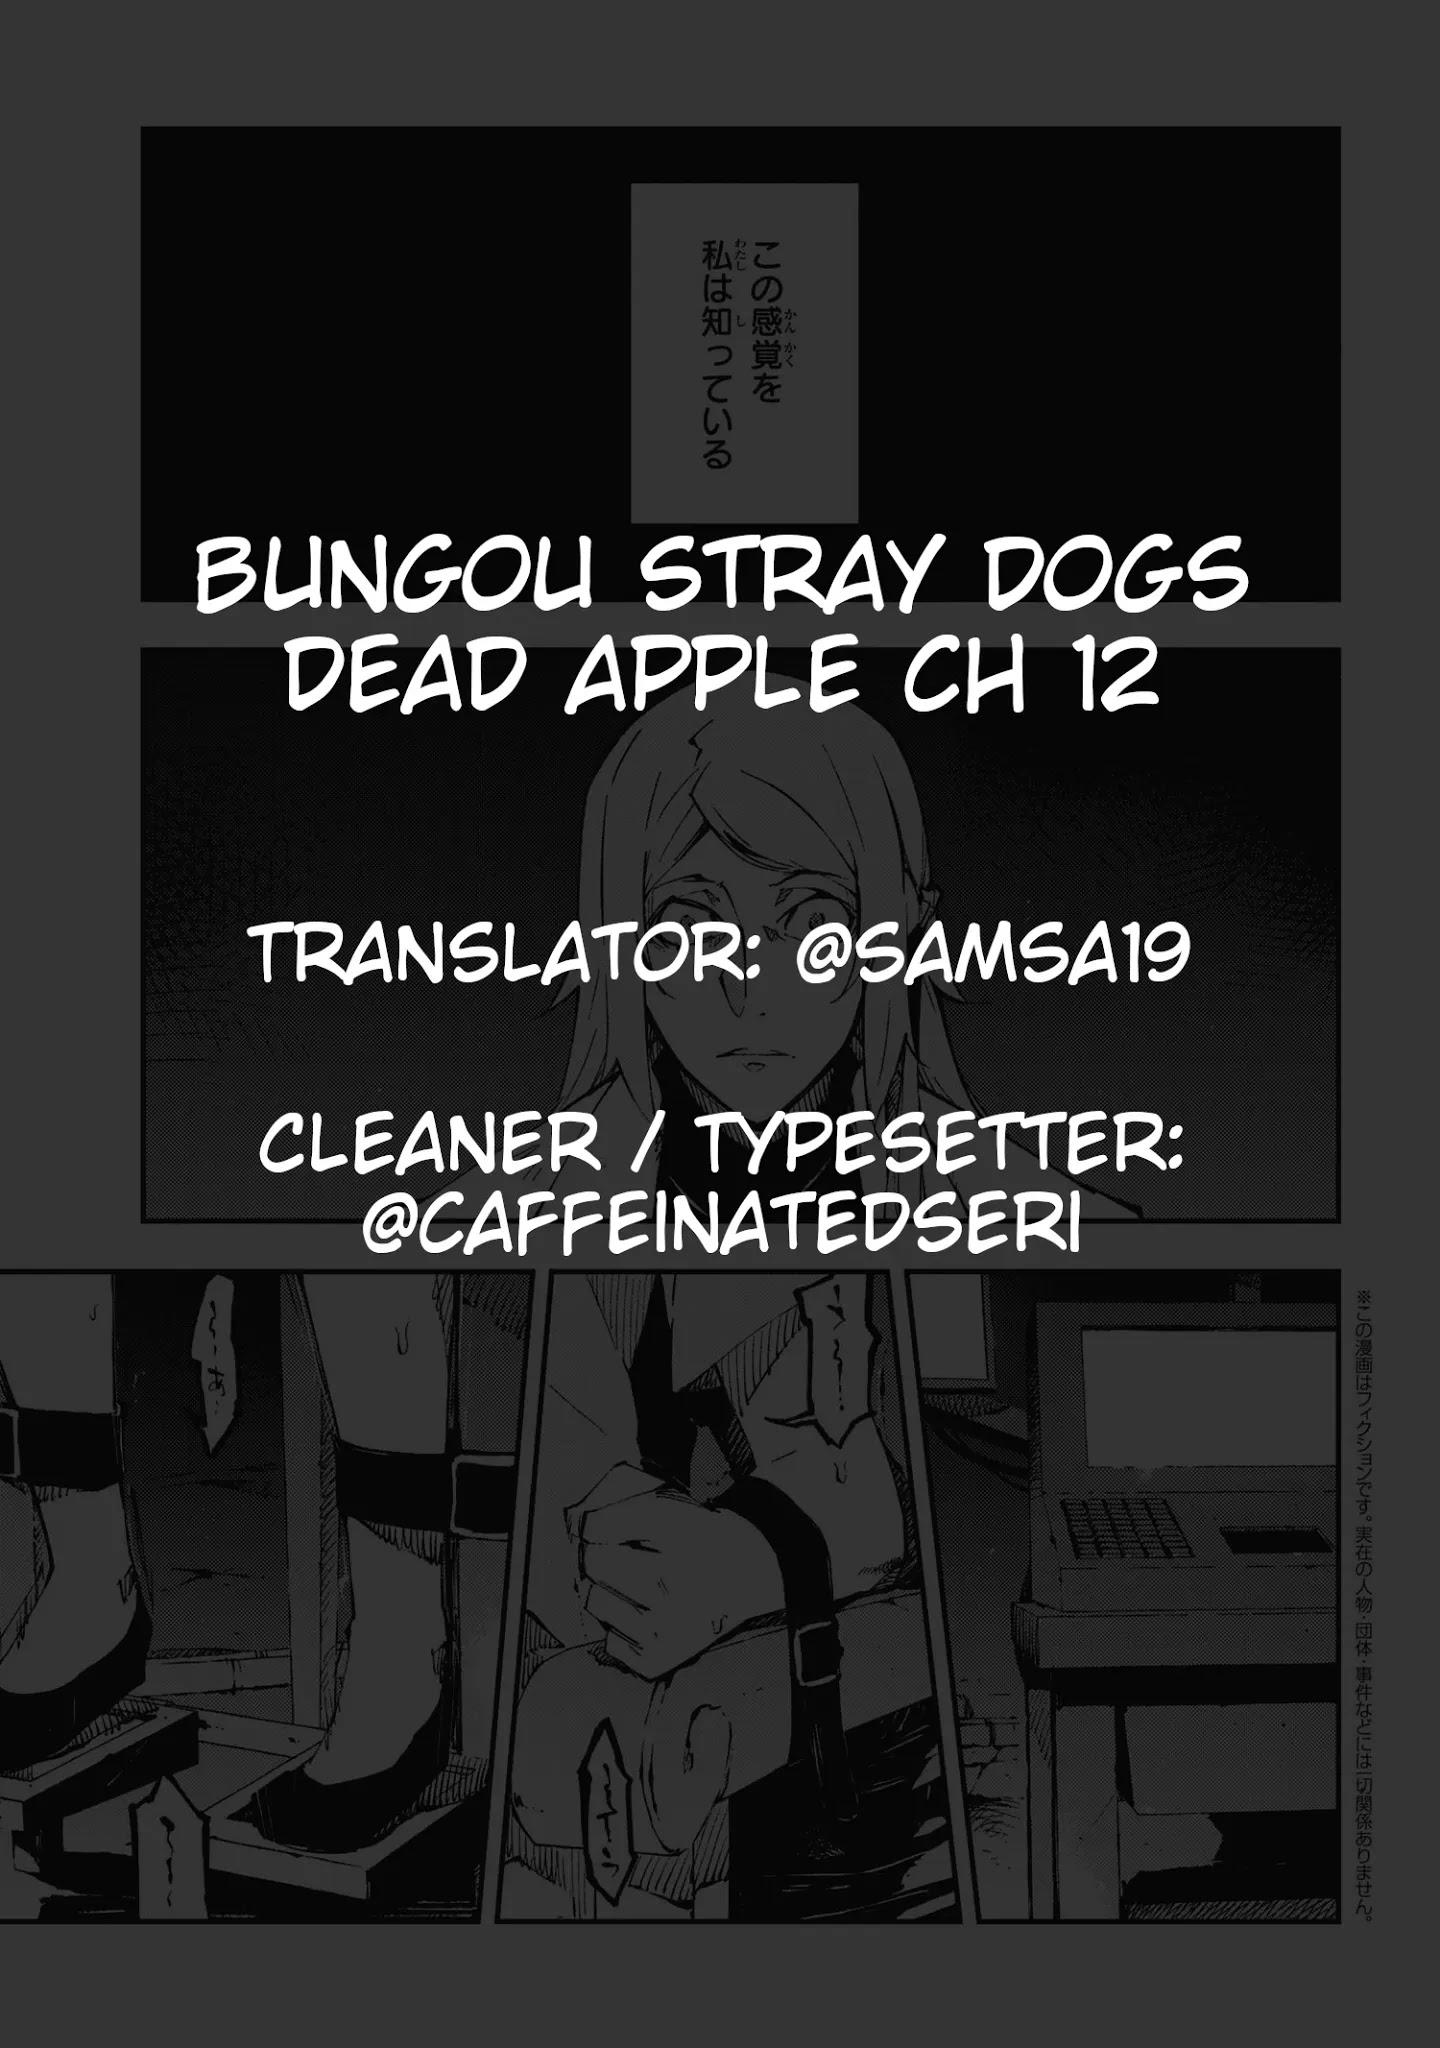 Read Bungou Stray Dogs: Dead Apple Manga Online Free - Manganelo